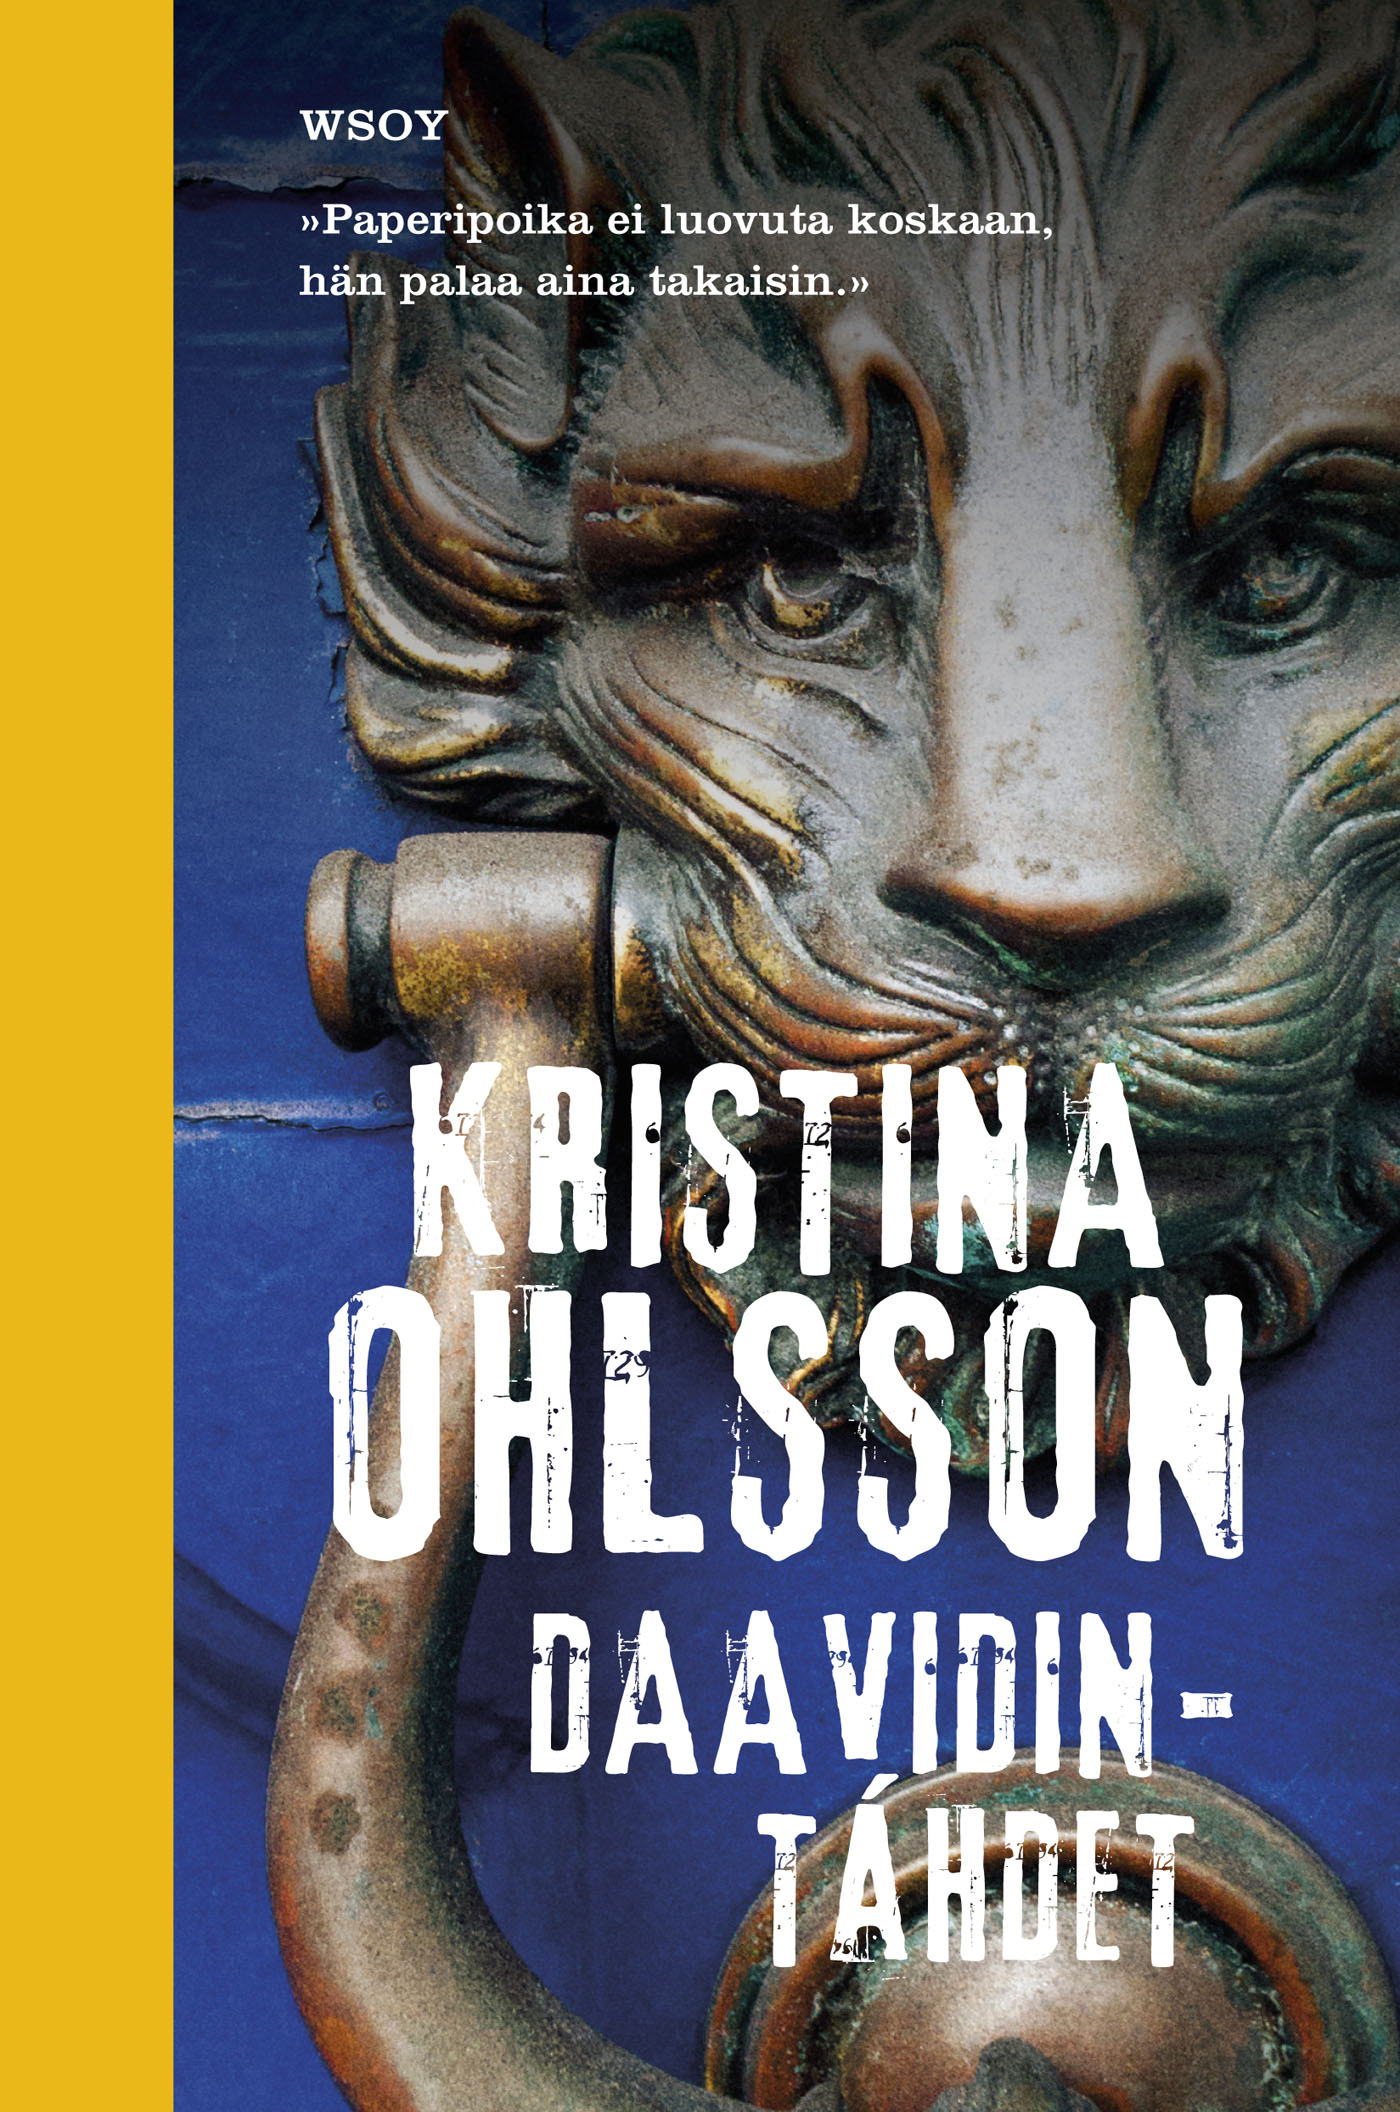 Ohlsson, Kristina - Daavidintähdet, ebook